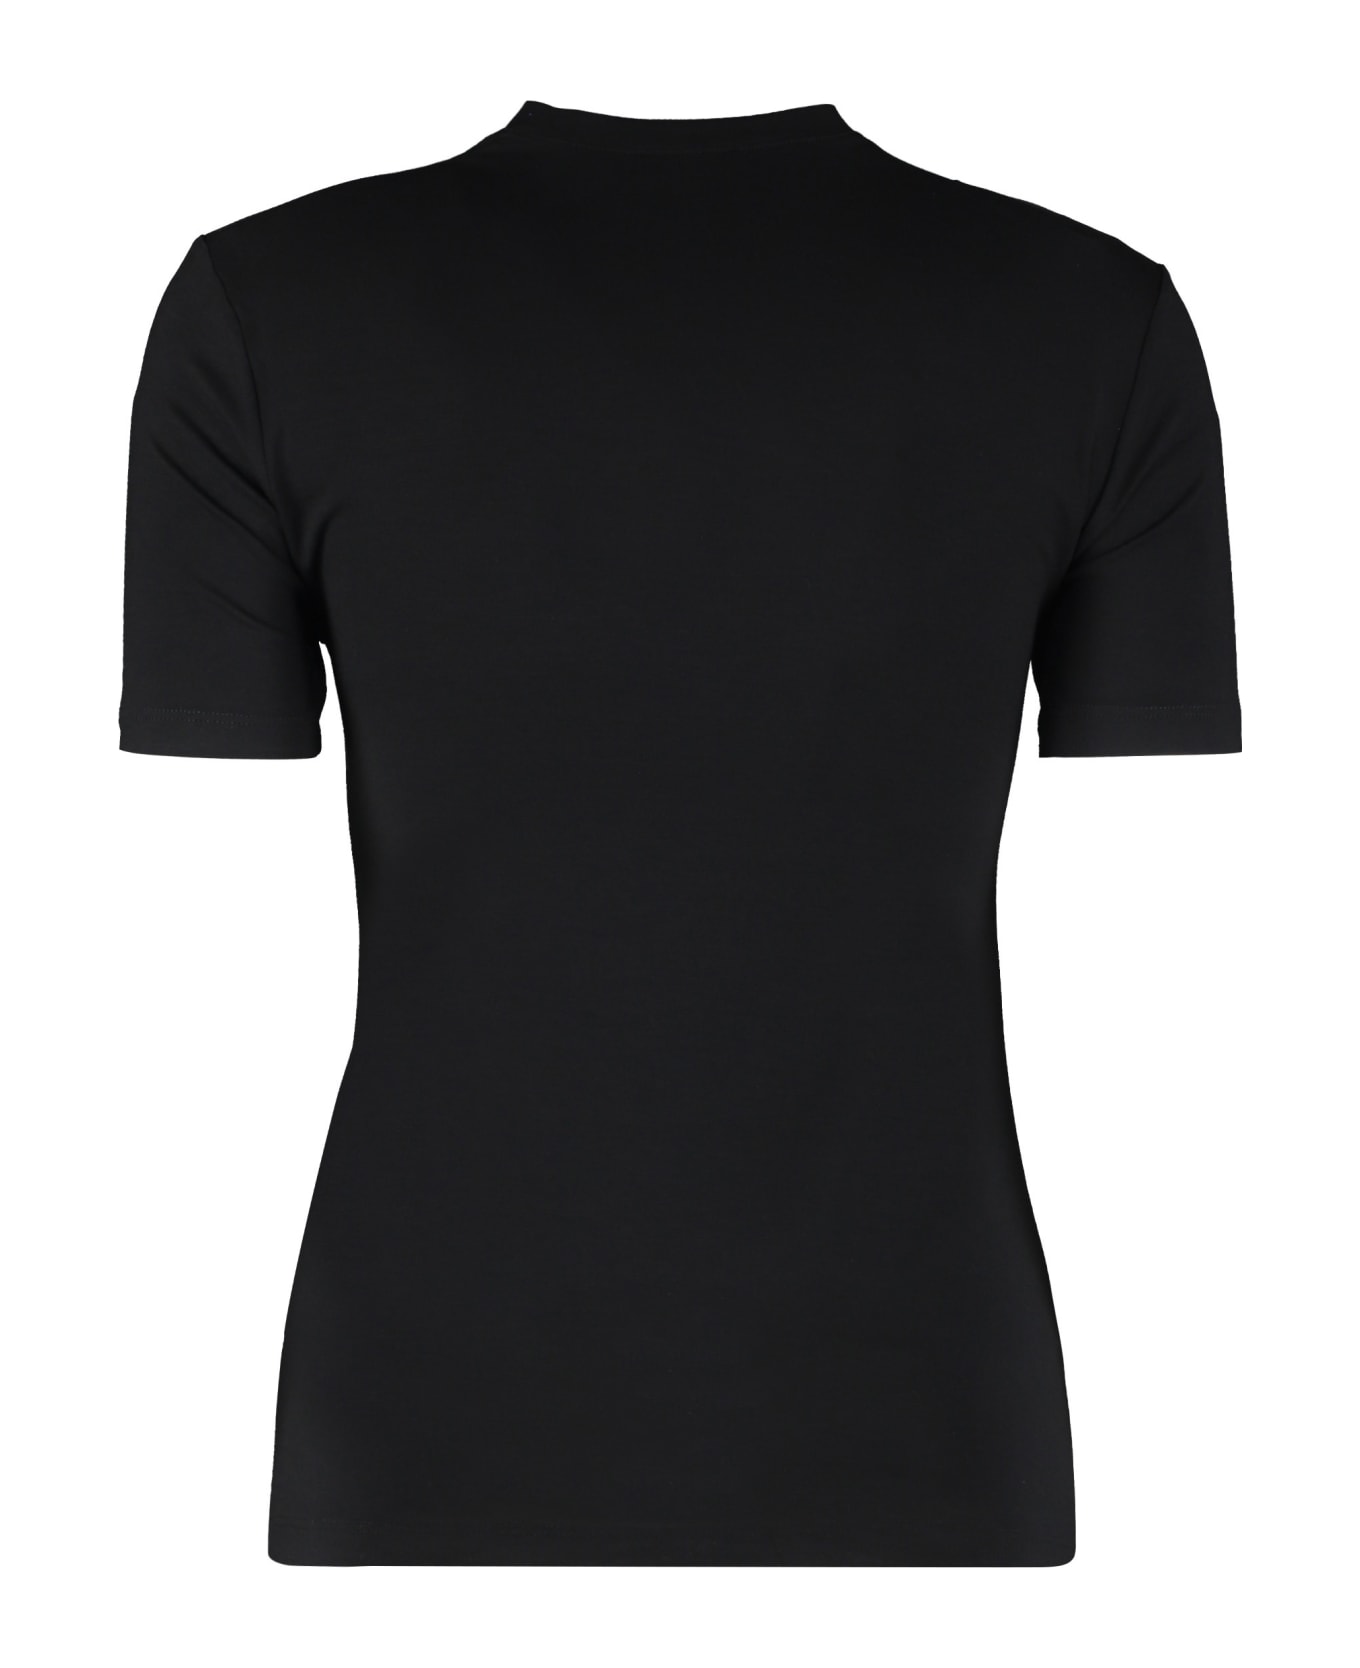 Versace Logo Crew-neck T-shirt - black